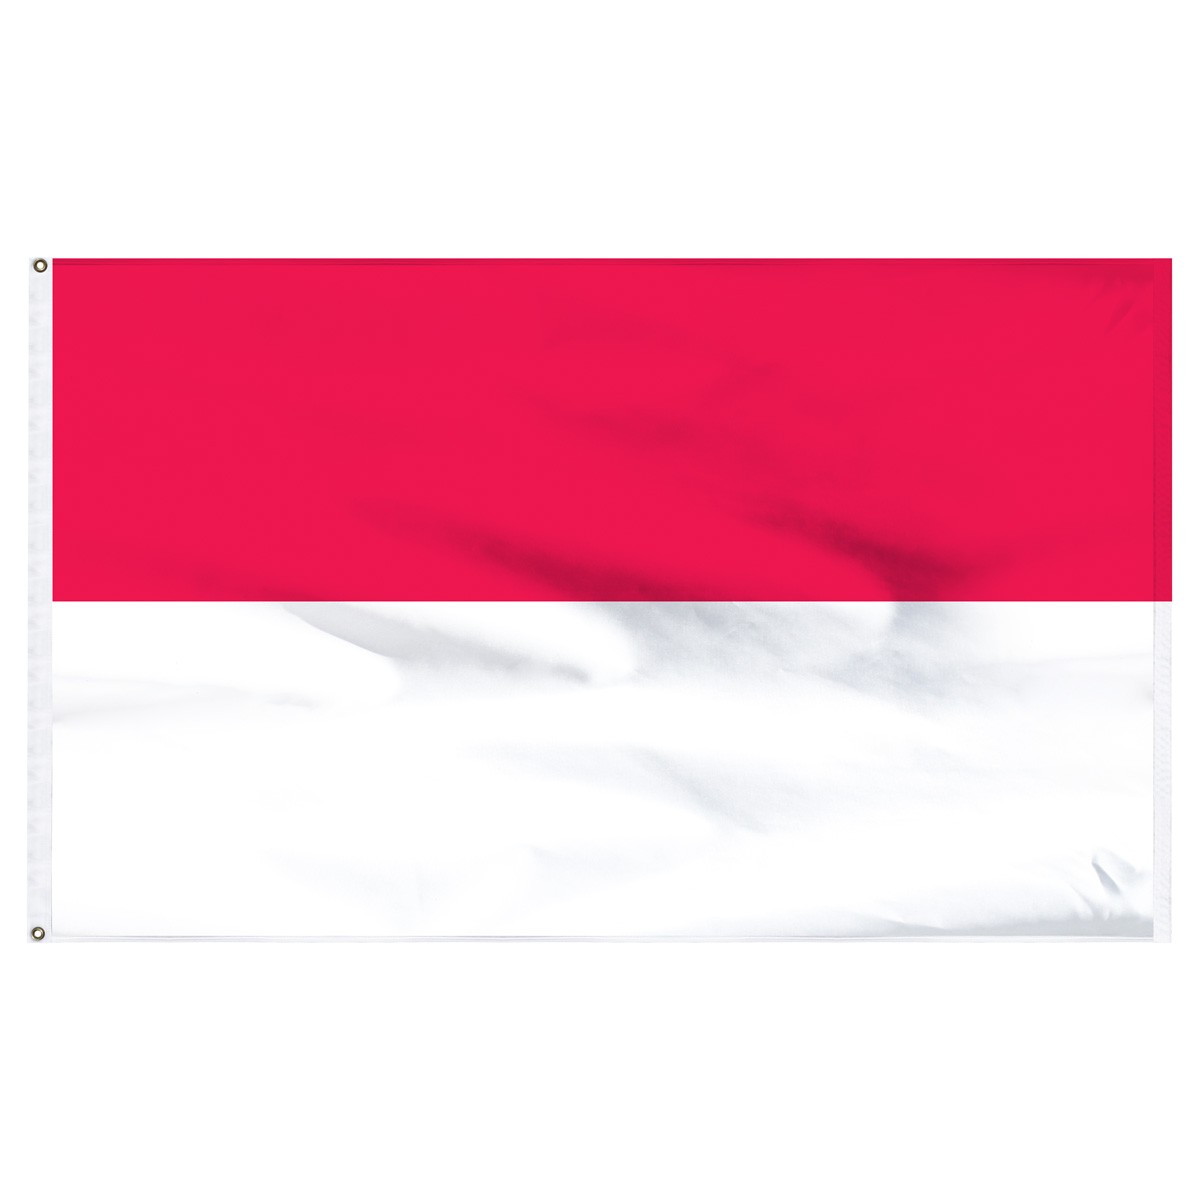 Indonesia Beach Flag and Sailing Flag